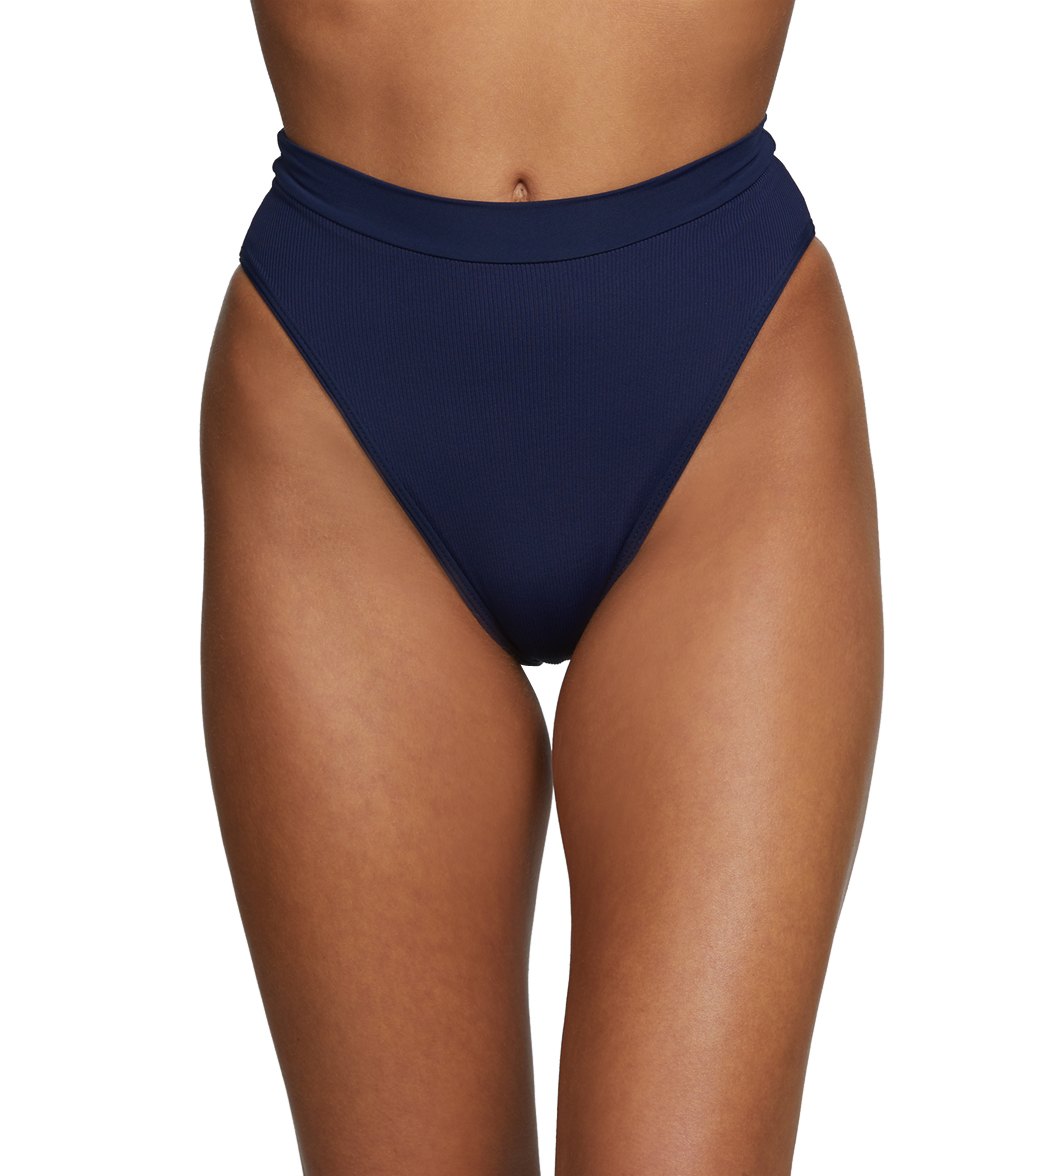 L-Space Ridin' High Frenchi Bikini Bottom - Midnight Blue X-Small - Swimoutlet.com